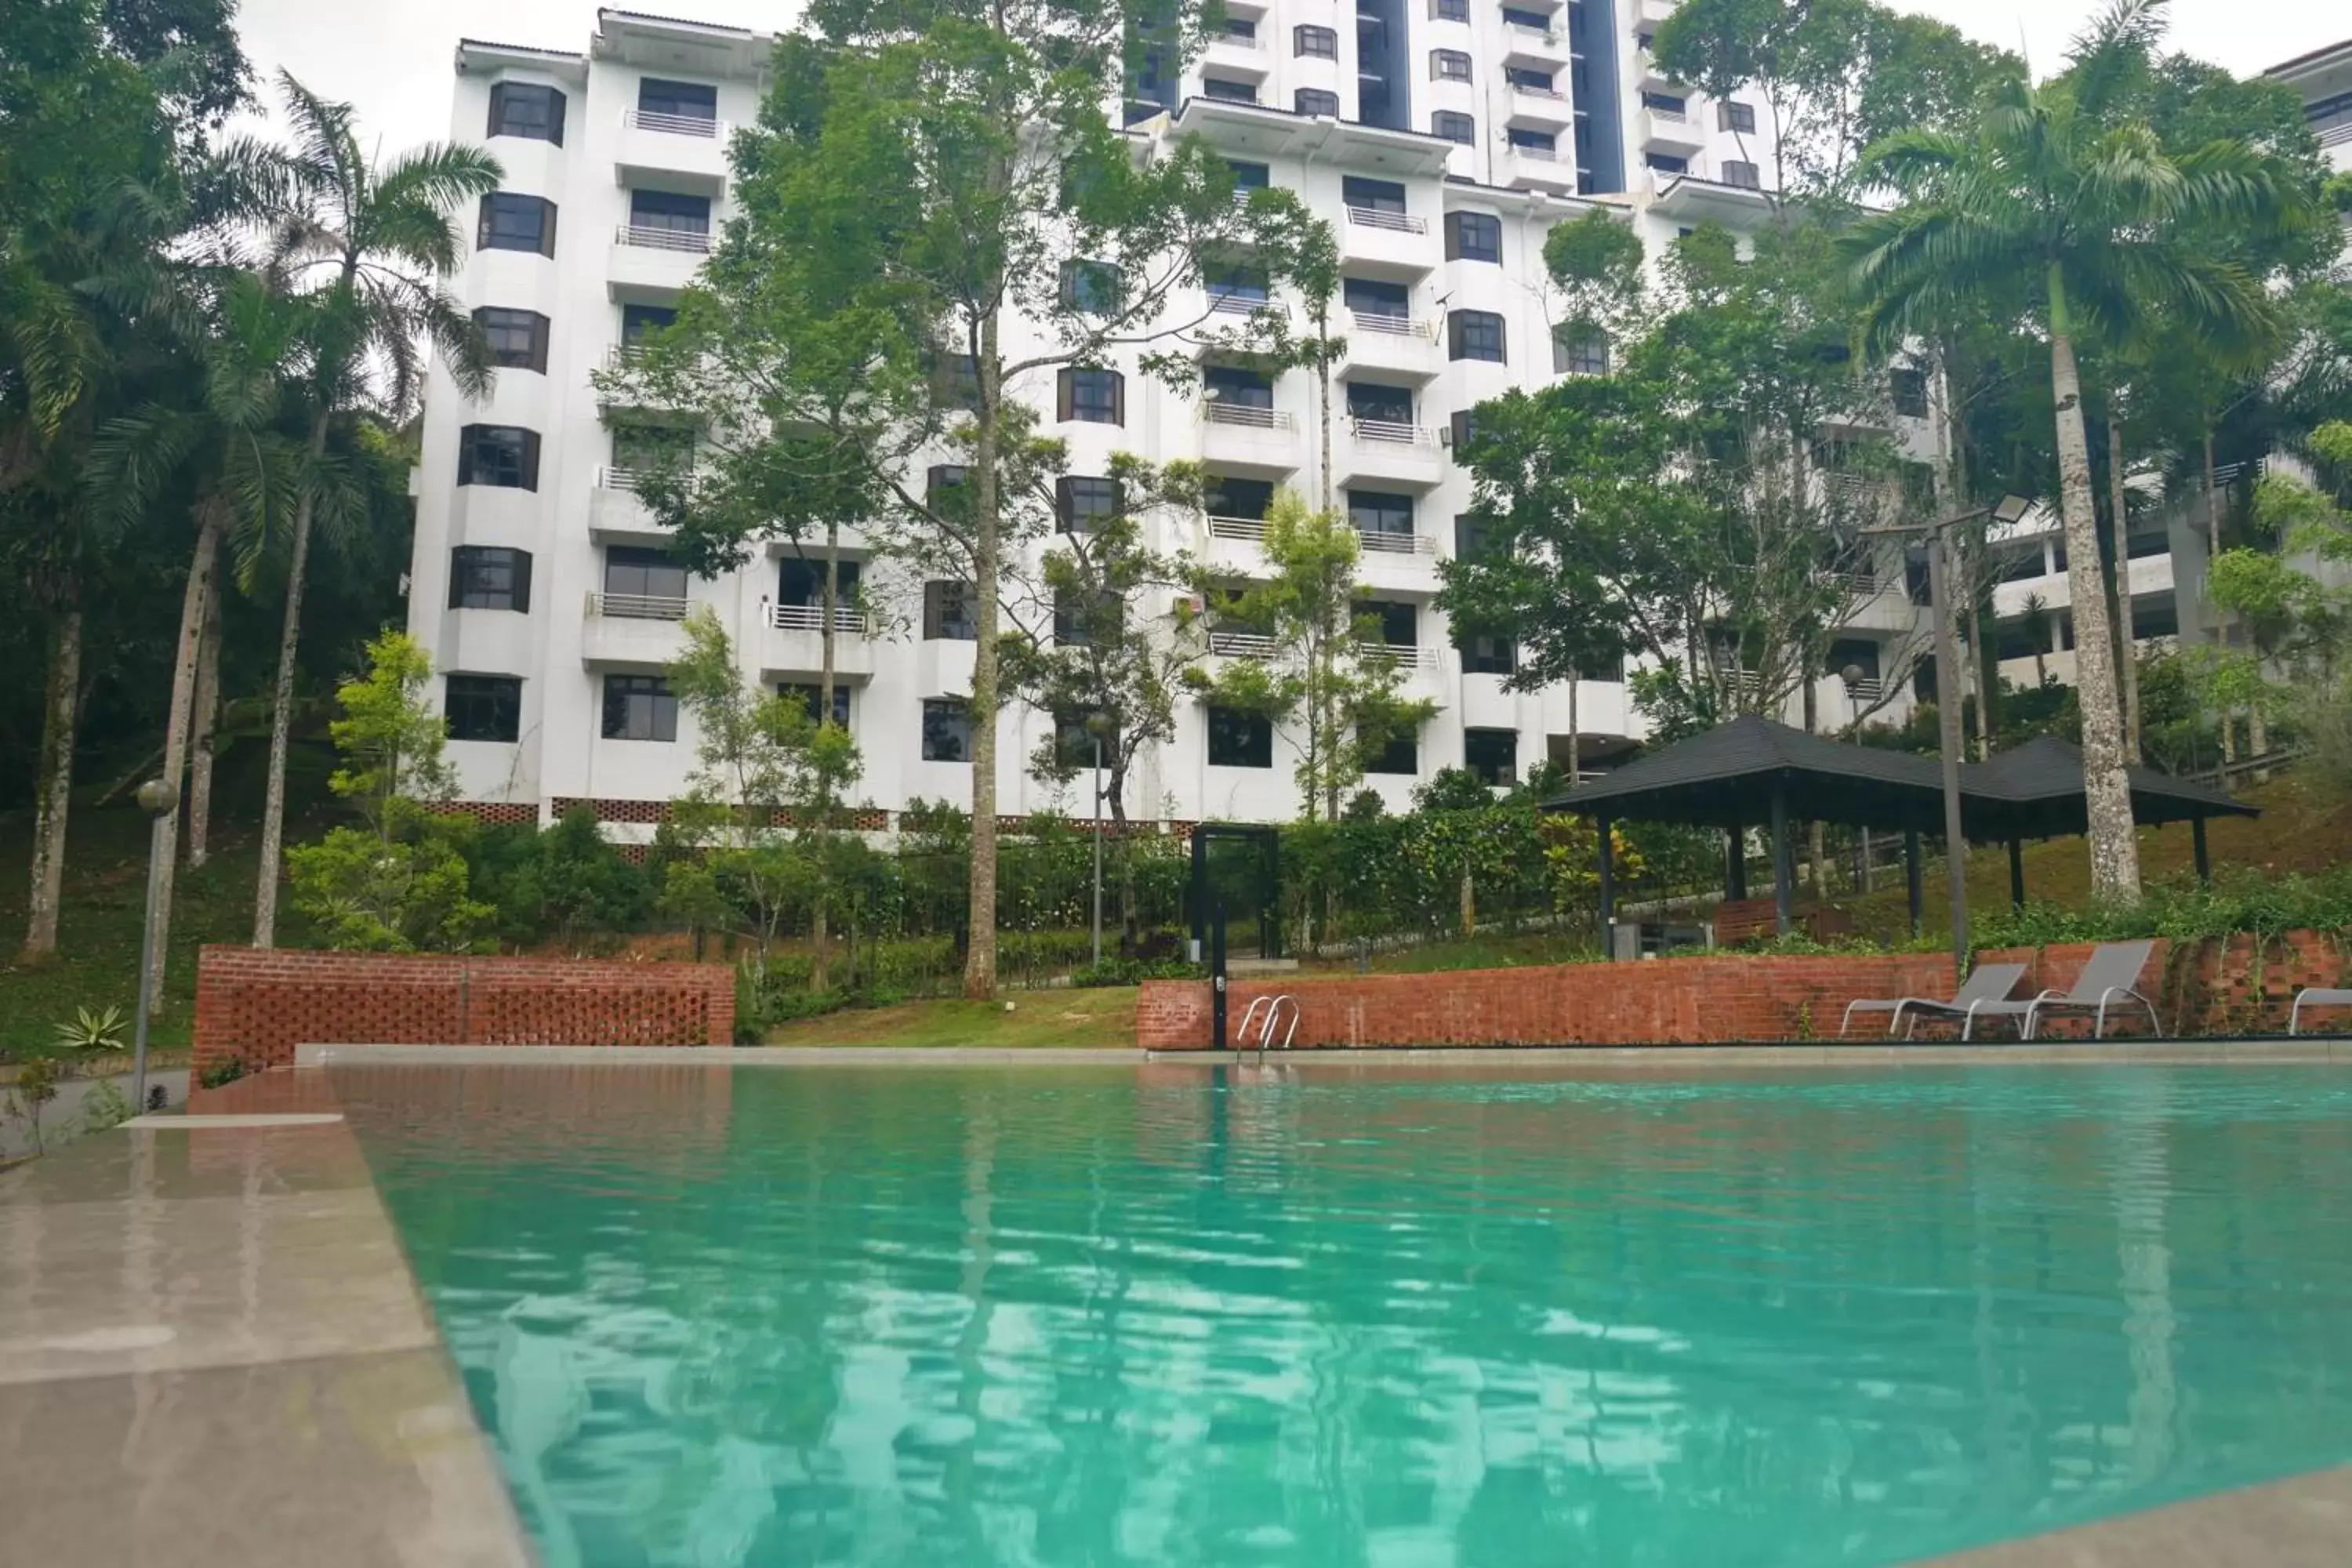 Swimming Pool in Genting View Resort